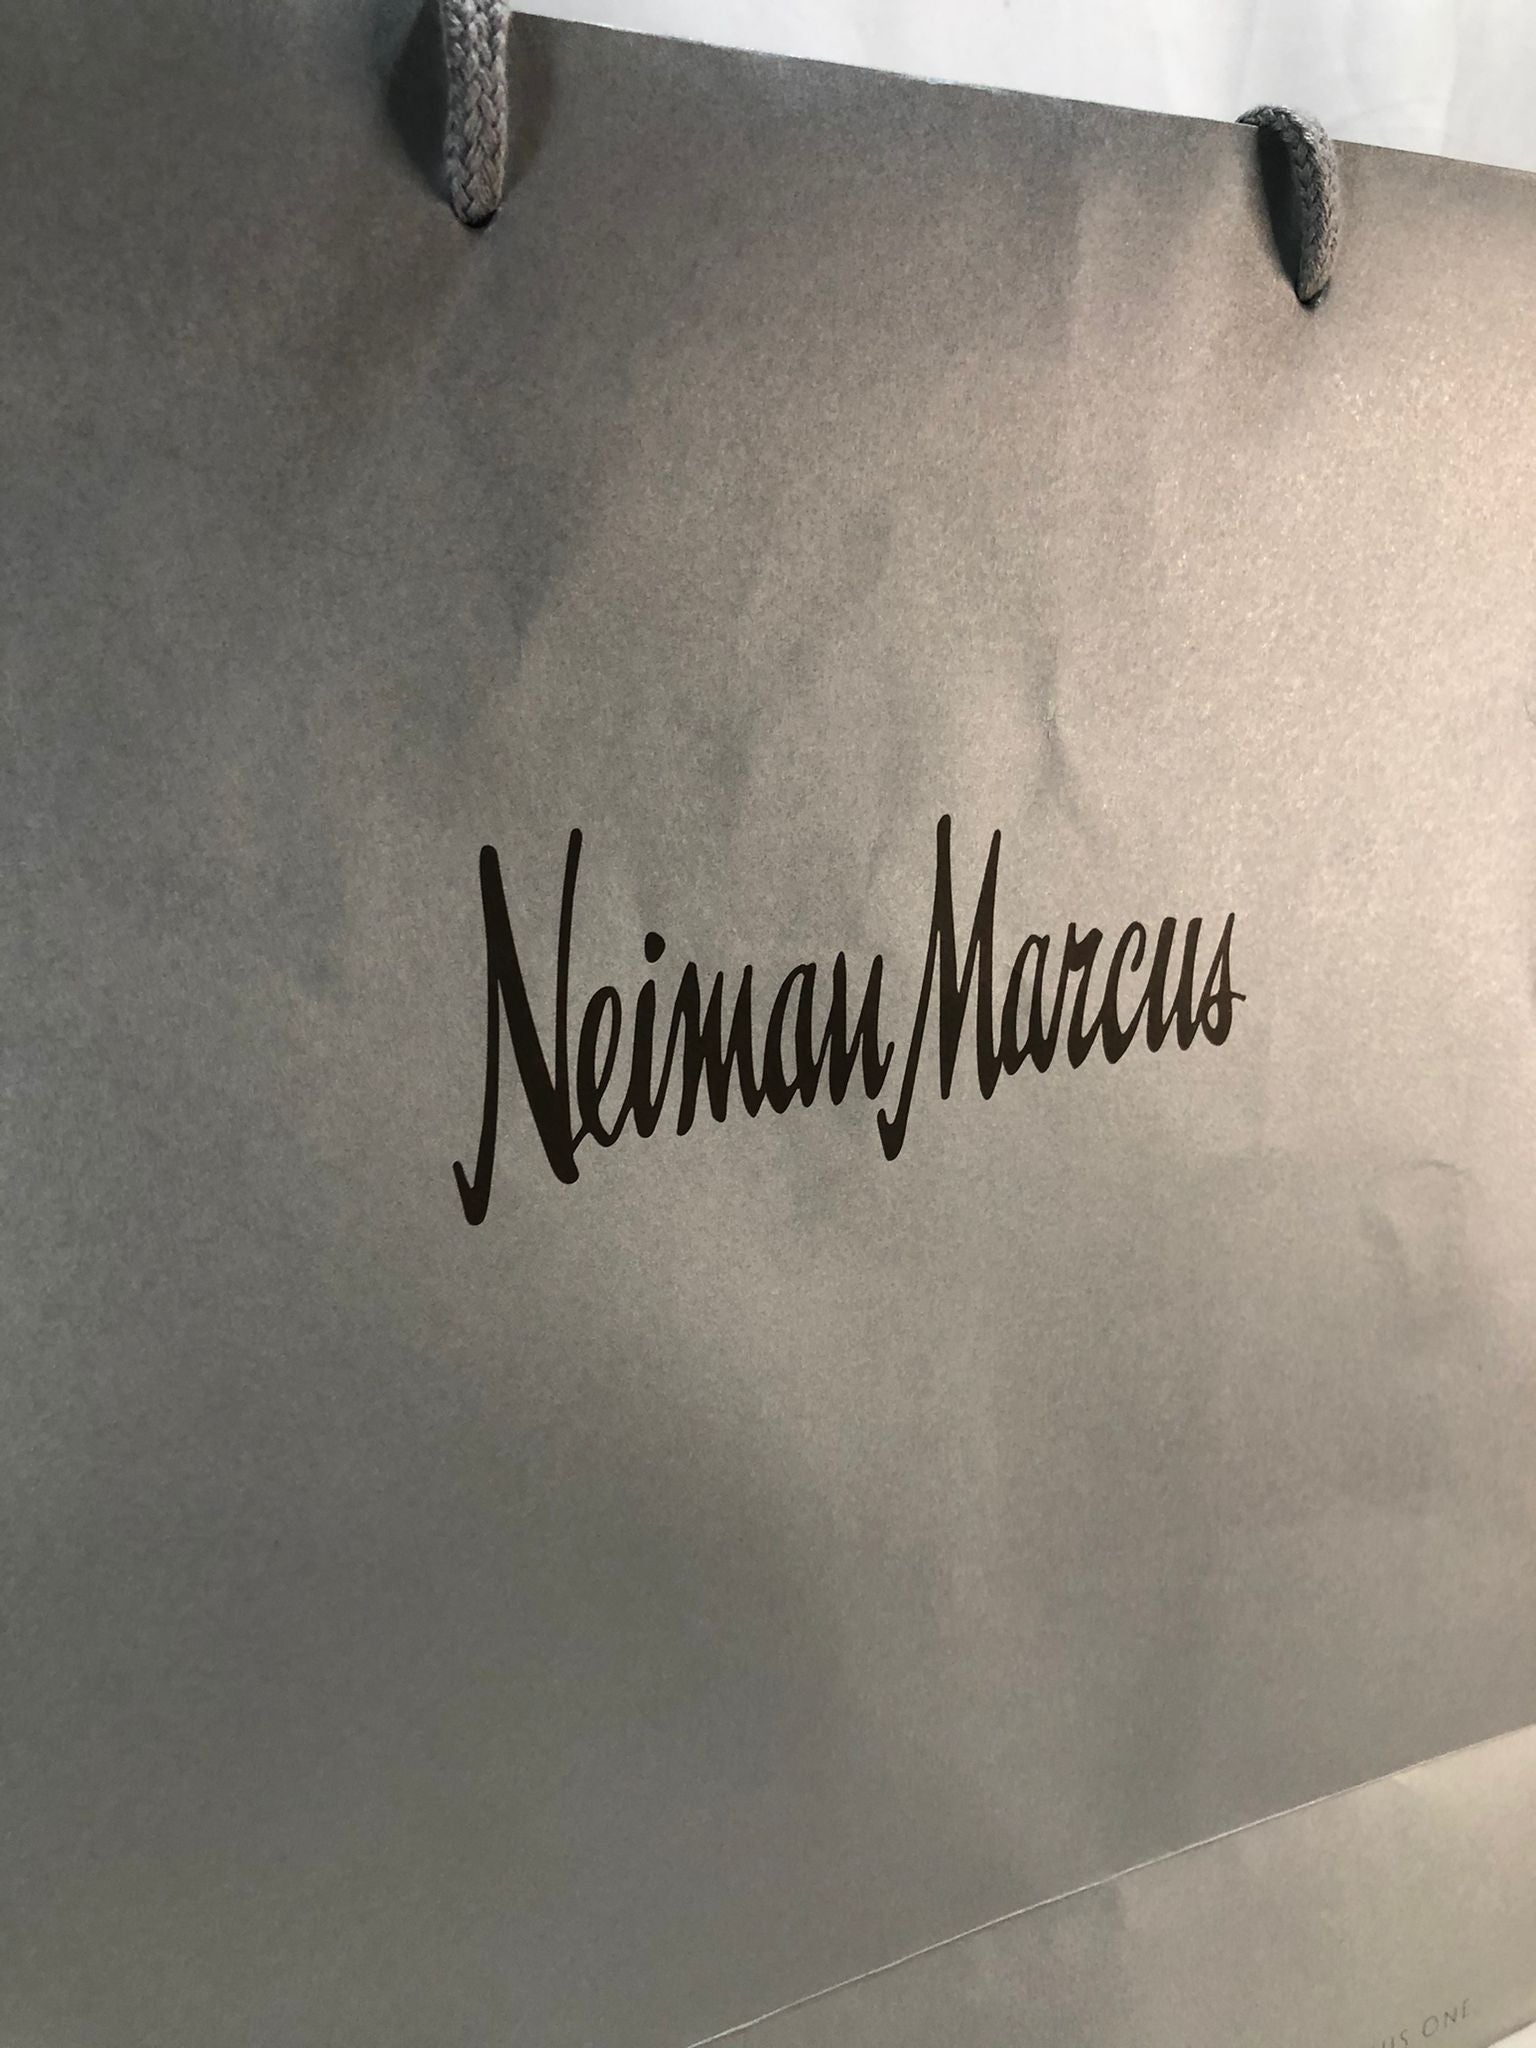 Authentic NEIMAN MARCUS Gift Bags – Wholesale Bidder